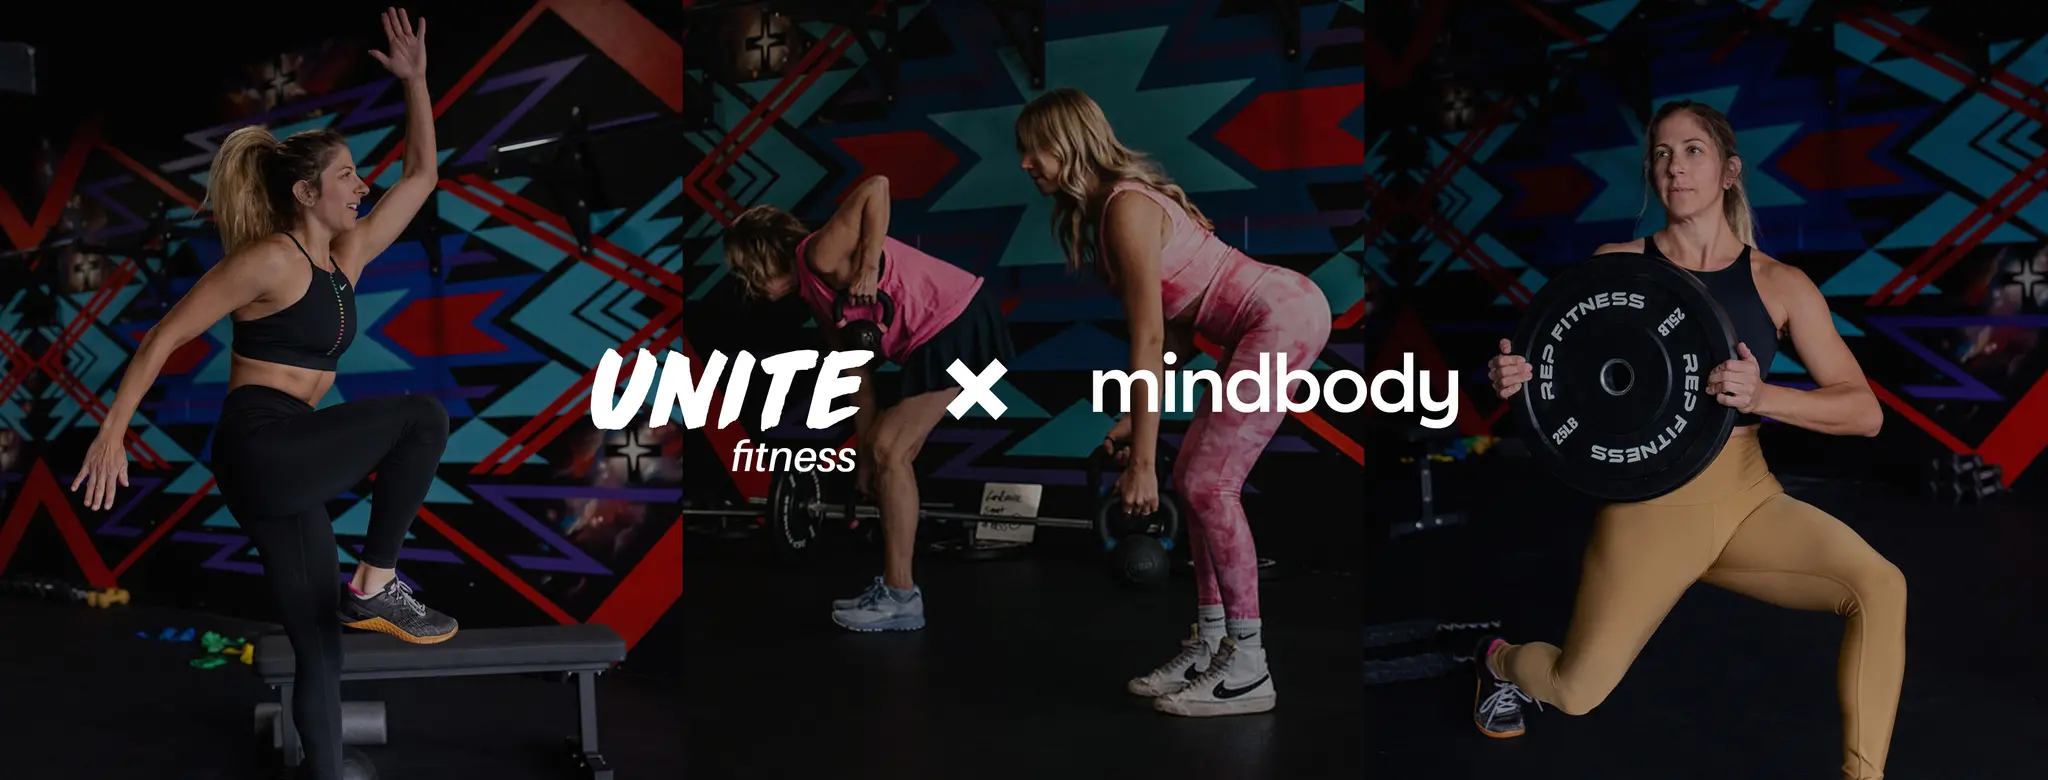 Unite fitness members